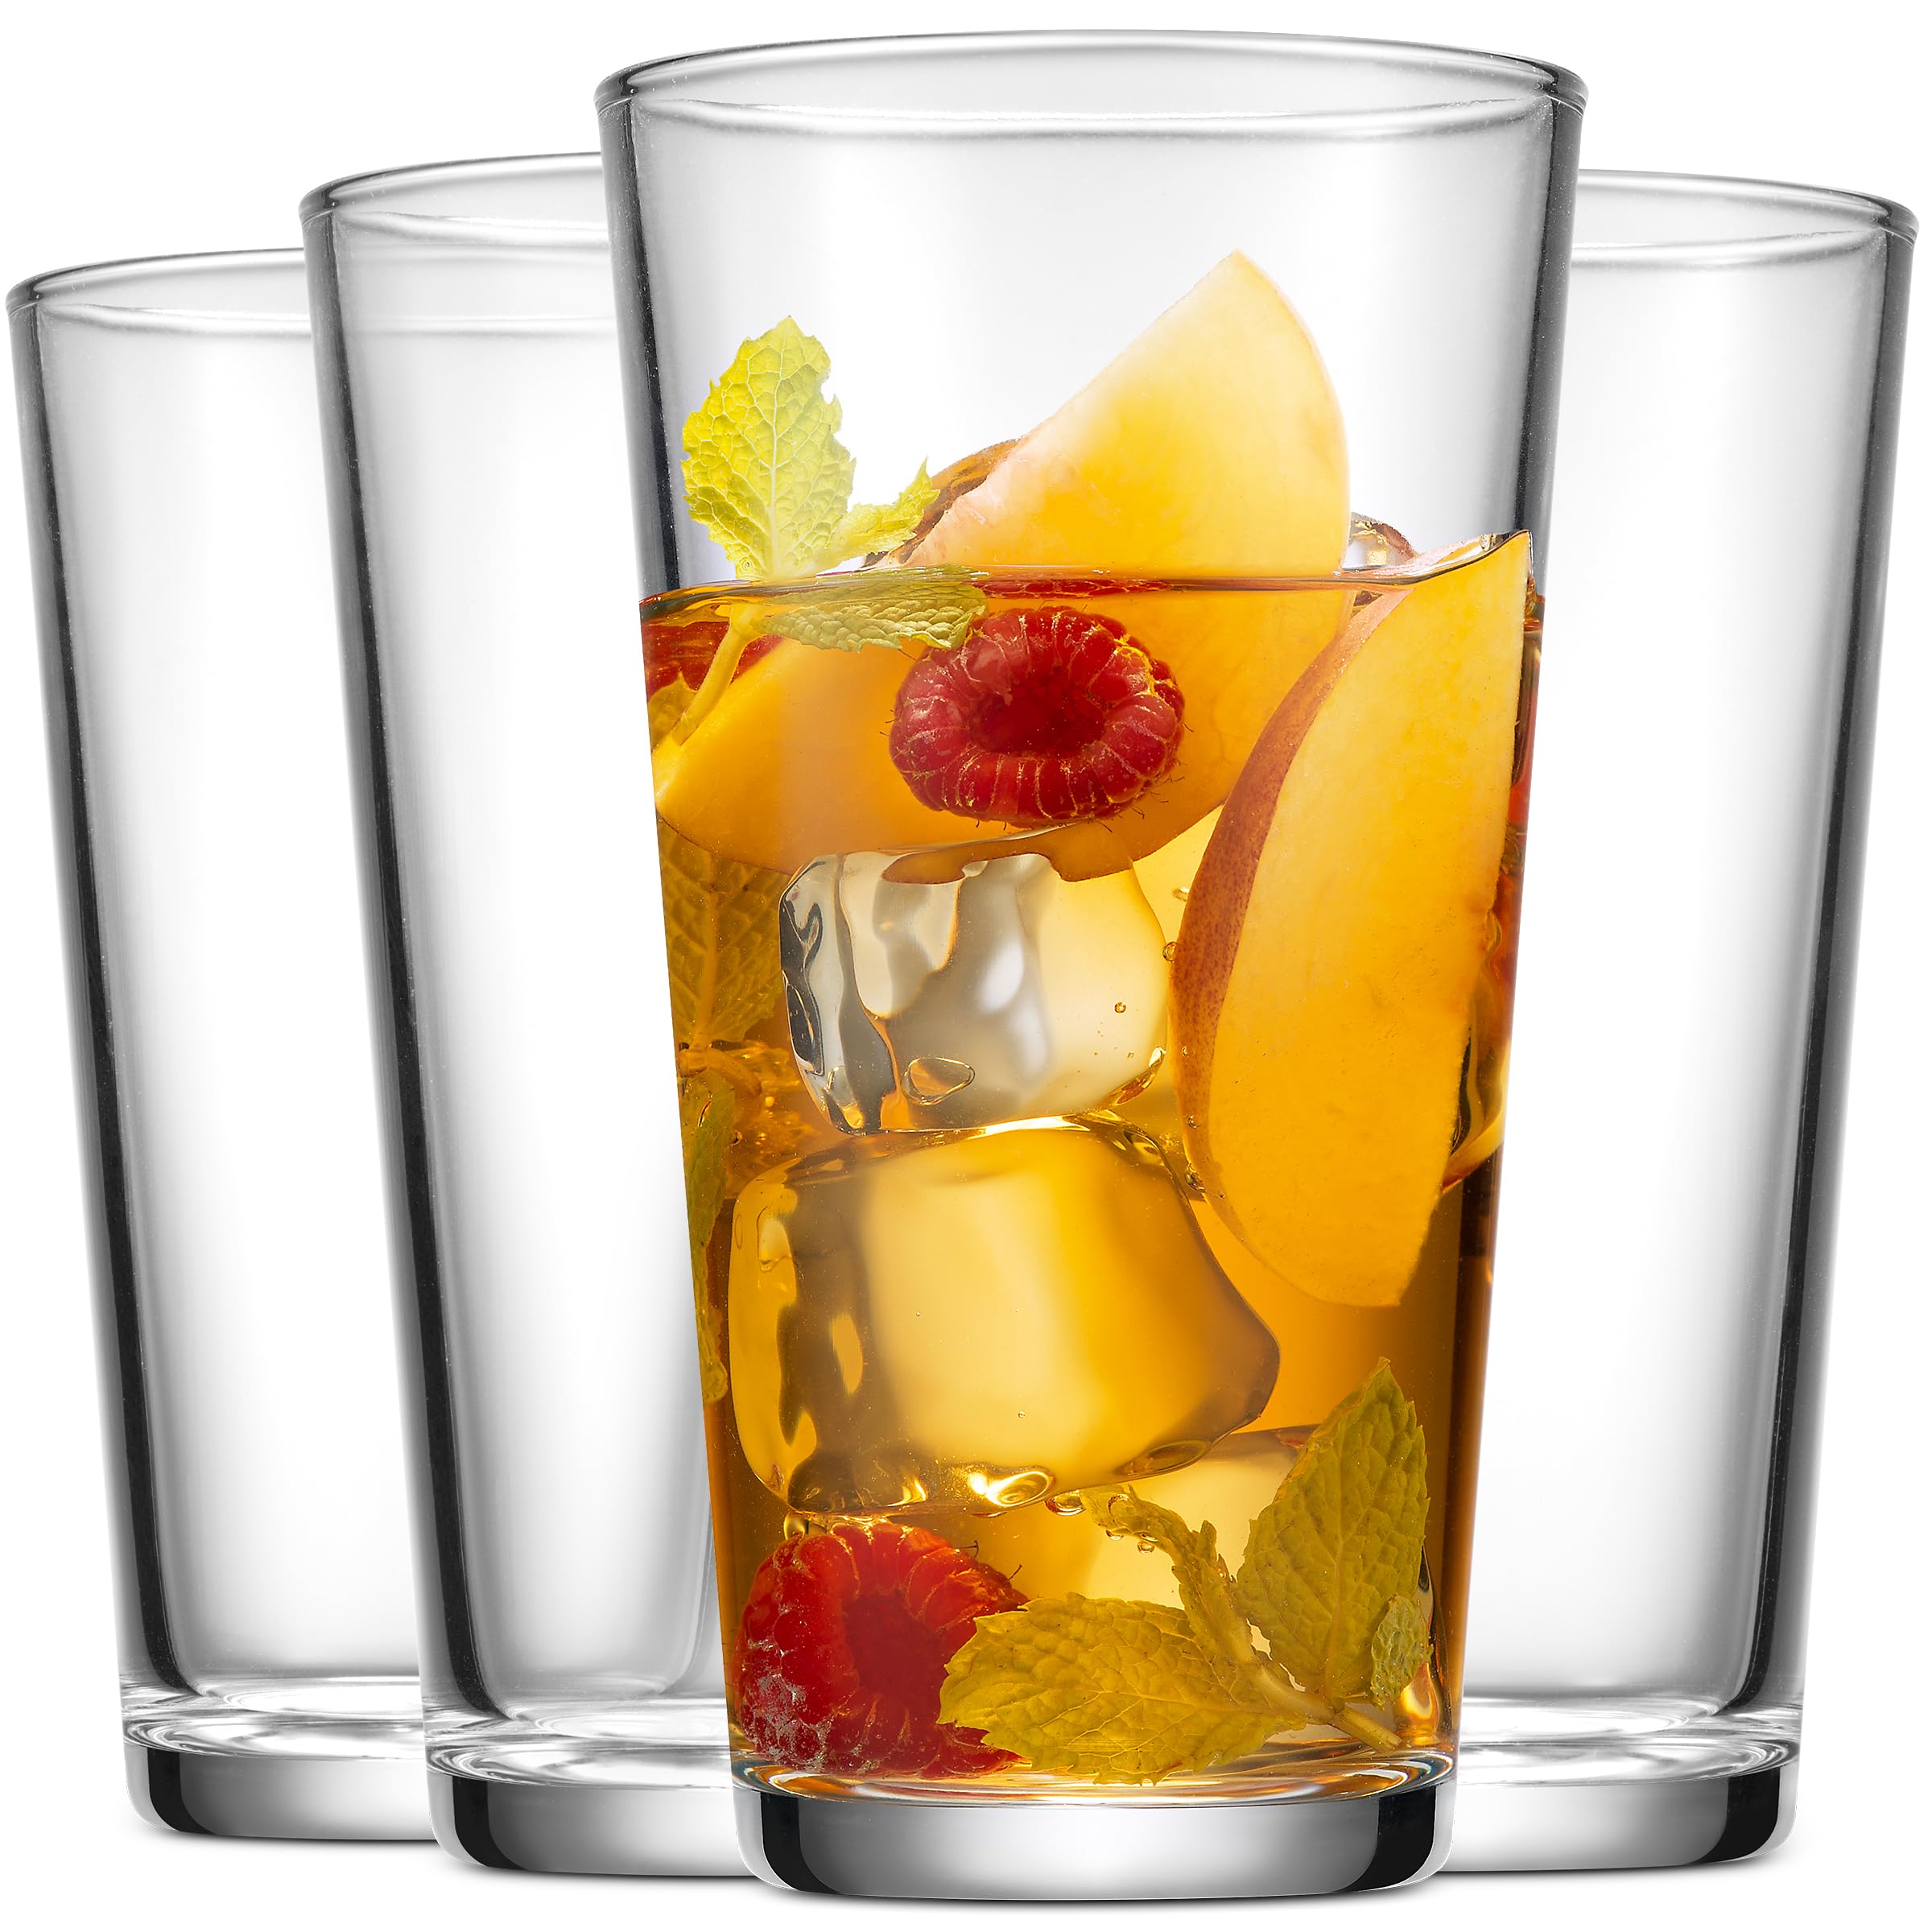 Glaver's Drinking Glasses Coolers Glassware Uses for Bar Glasses, Water, Beer, Juice, Iced Tea, Cocktails, Dishwasher Safe.  - Like New